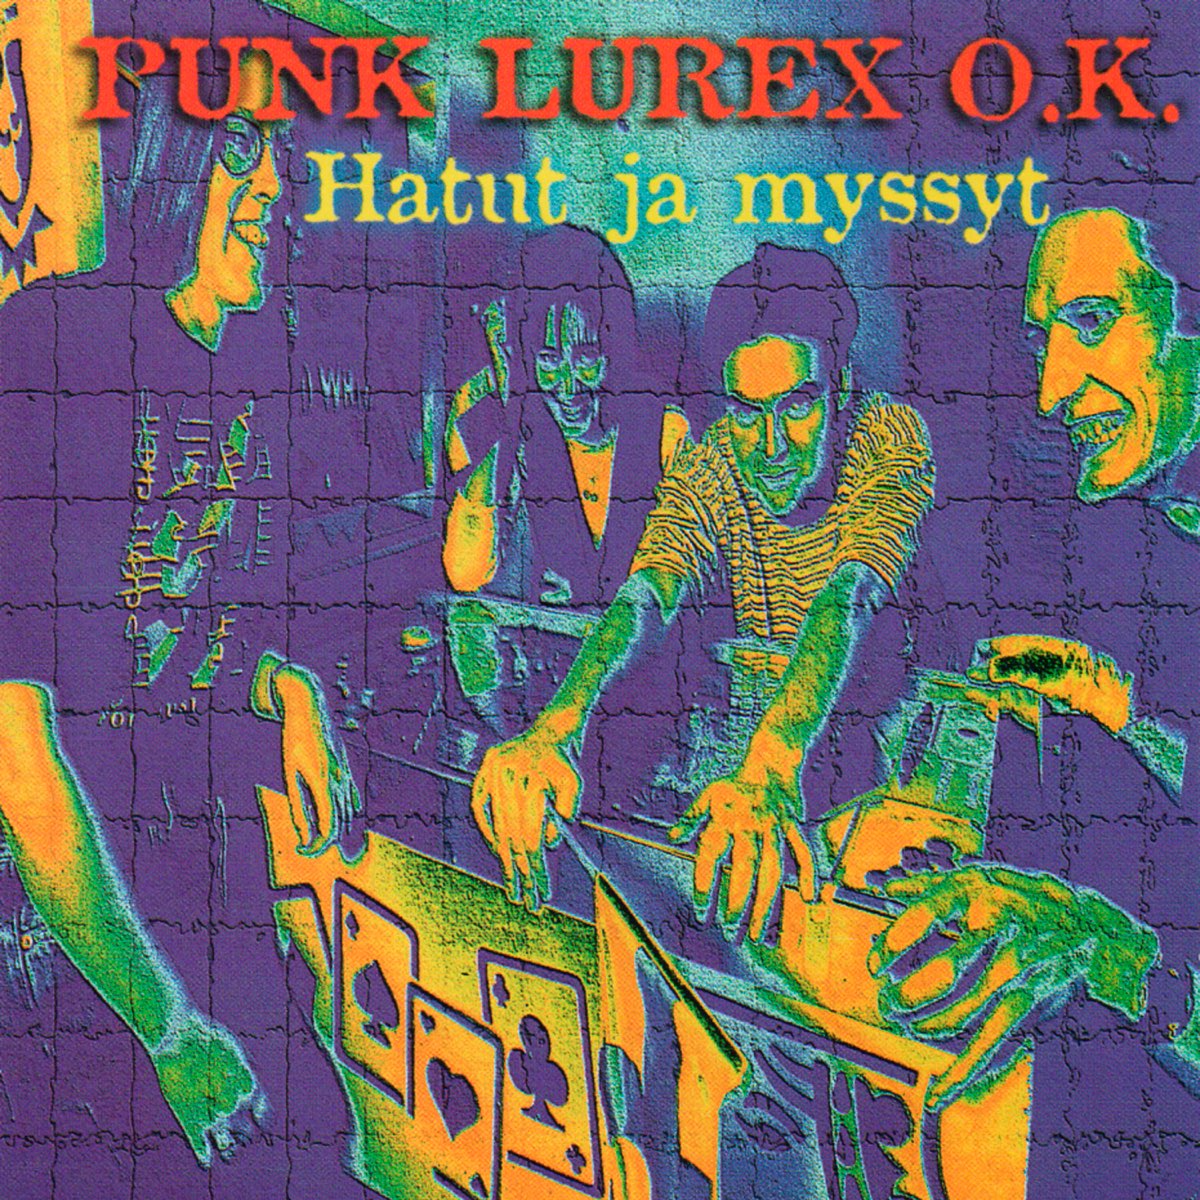 Hatut ja Myssyt - Album by Punk Lurex OK - Apple Music